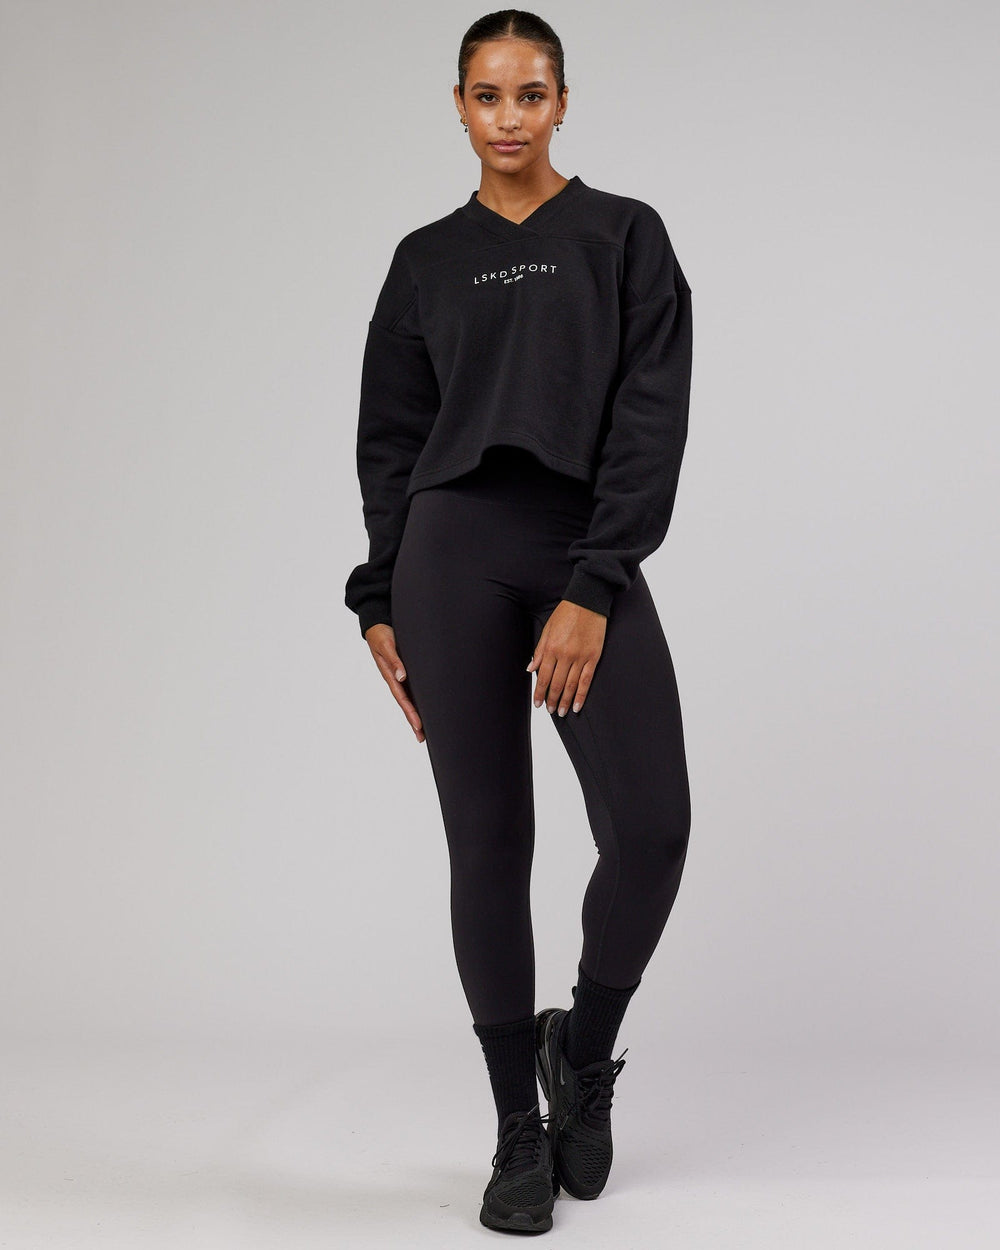 Woman wearing Touchdown Sweater - Black